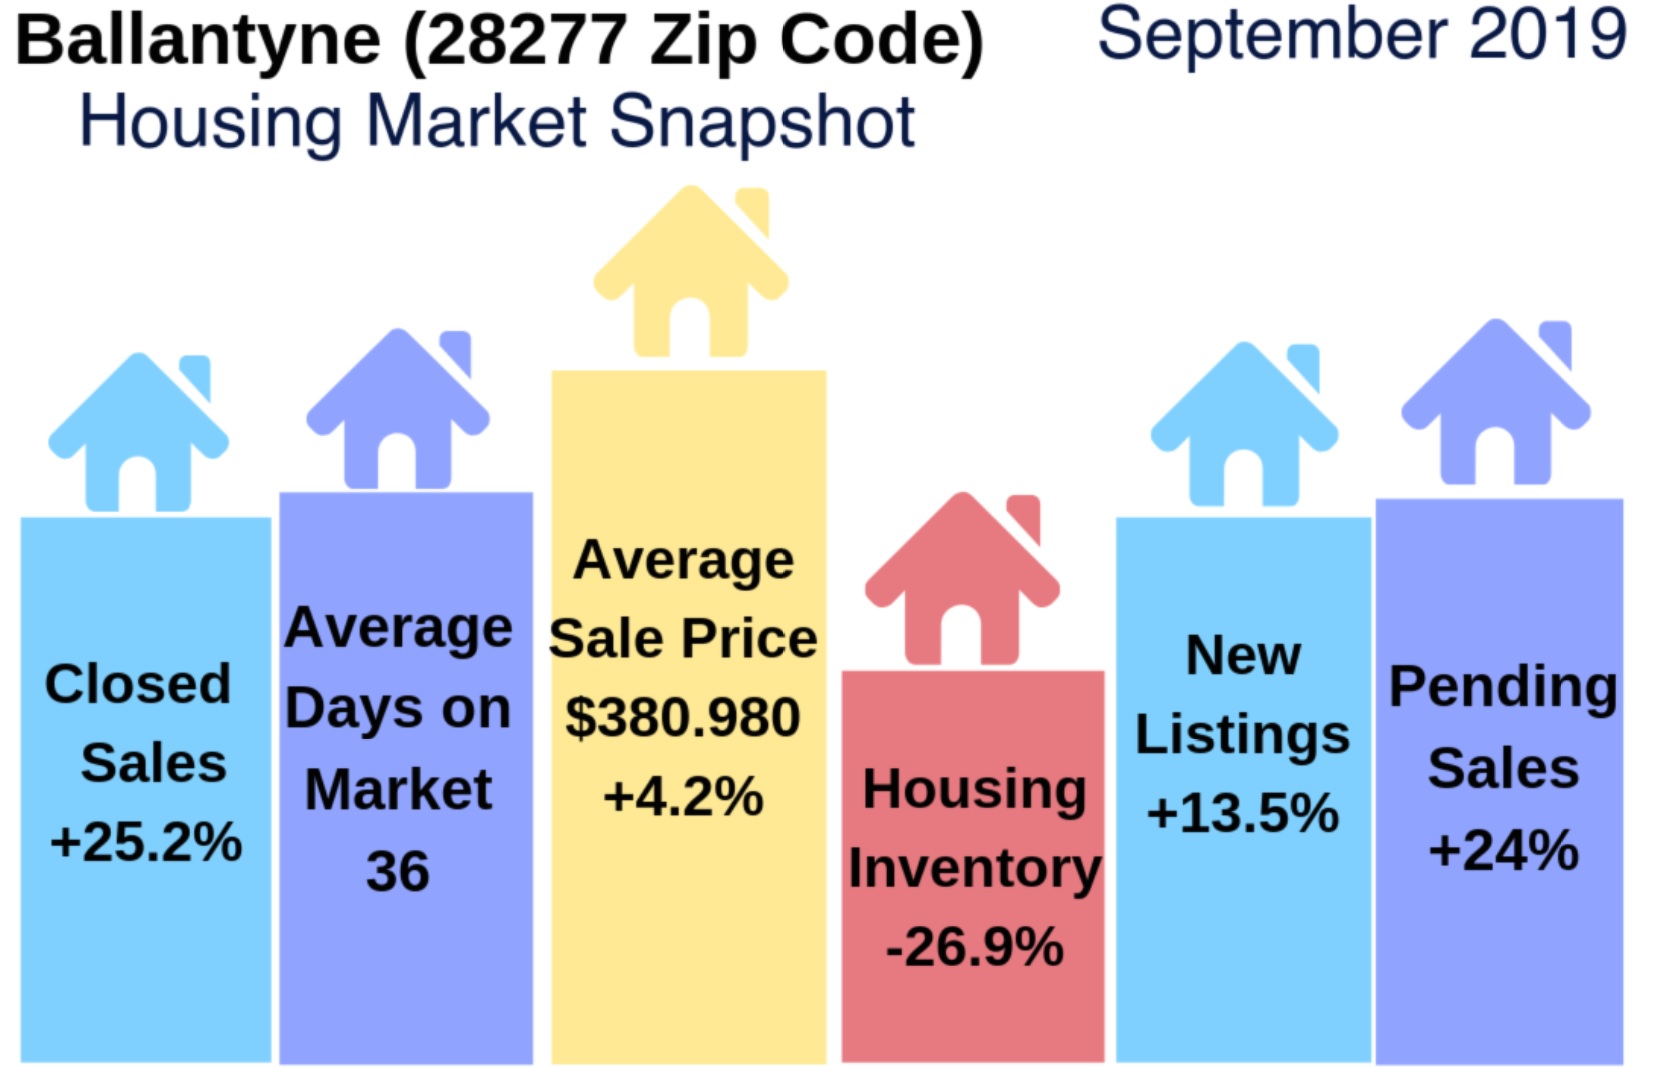 Ballantyne (28277 Zip Code) Real Estate Report: September 2019